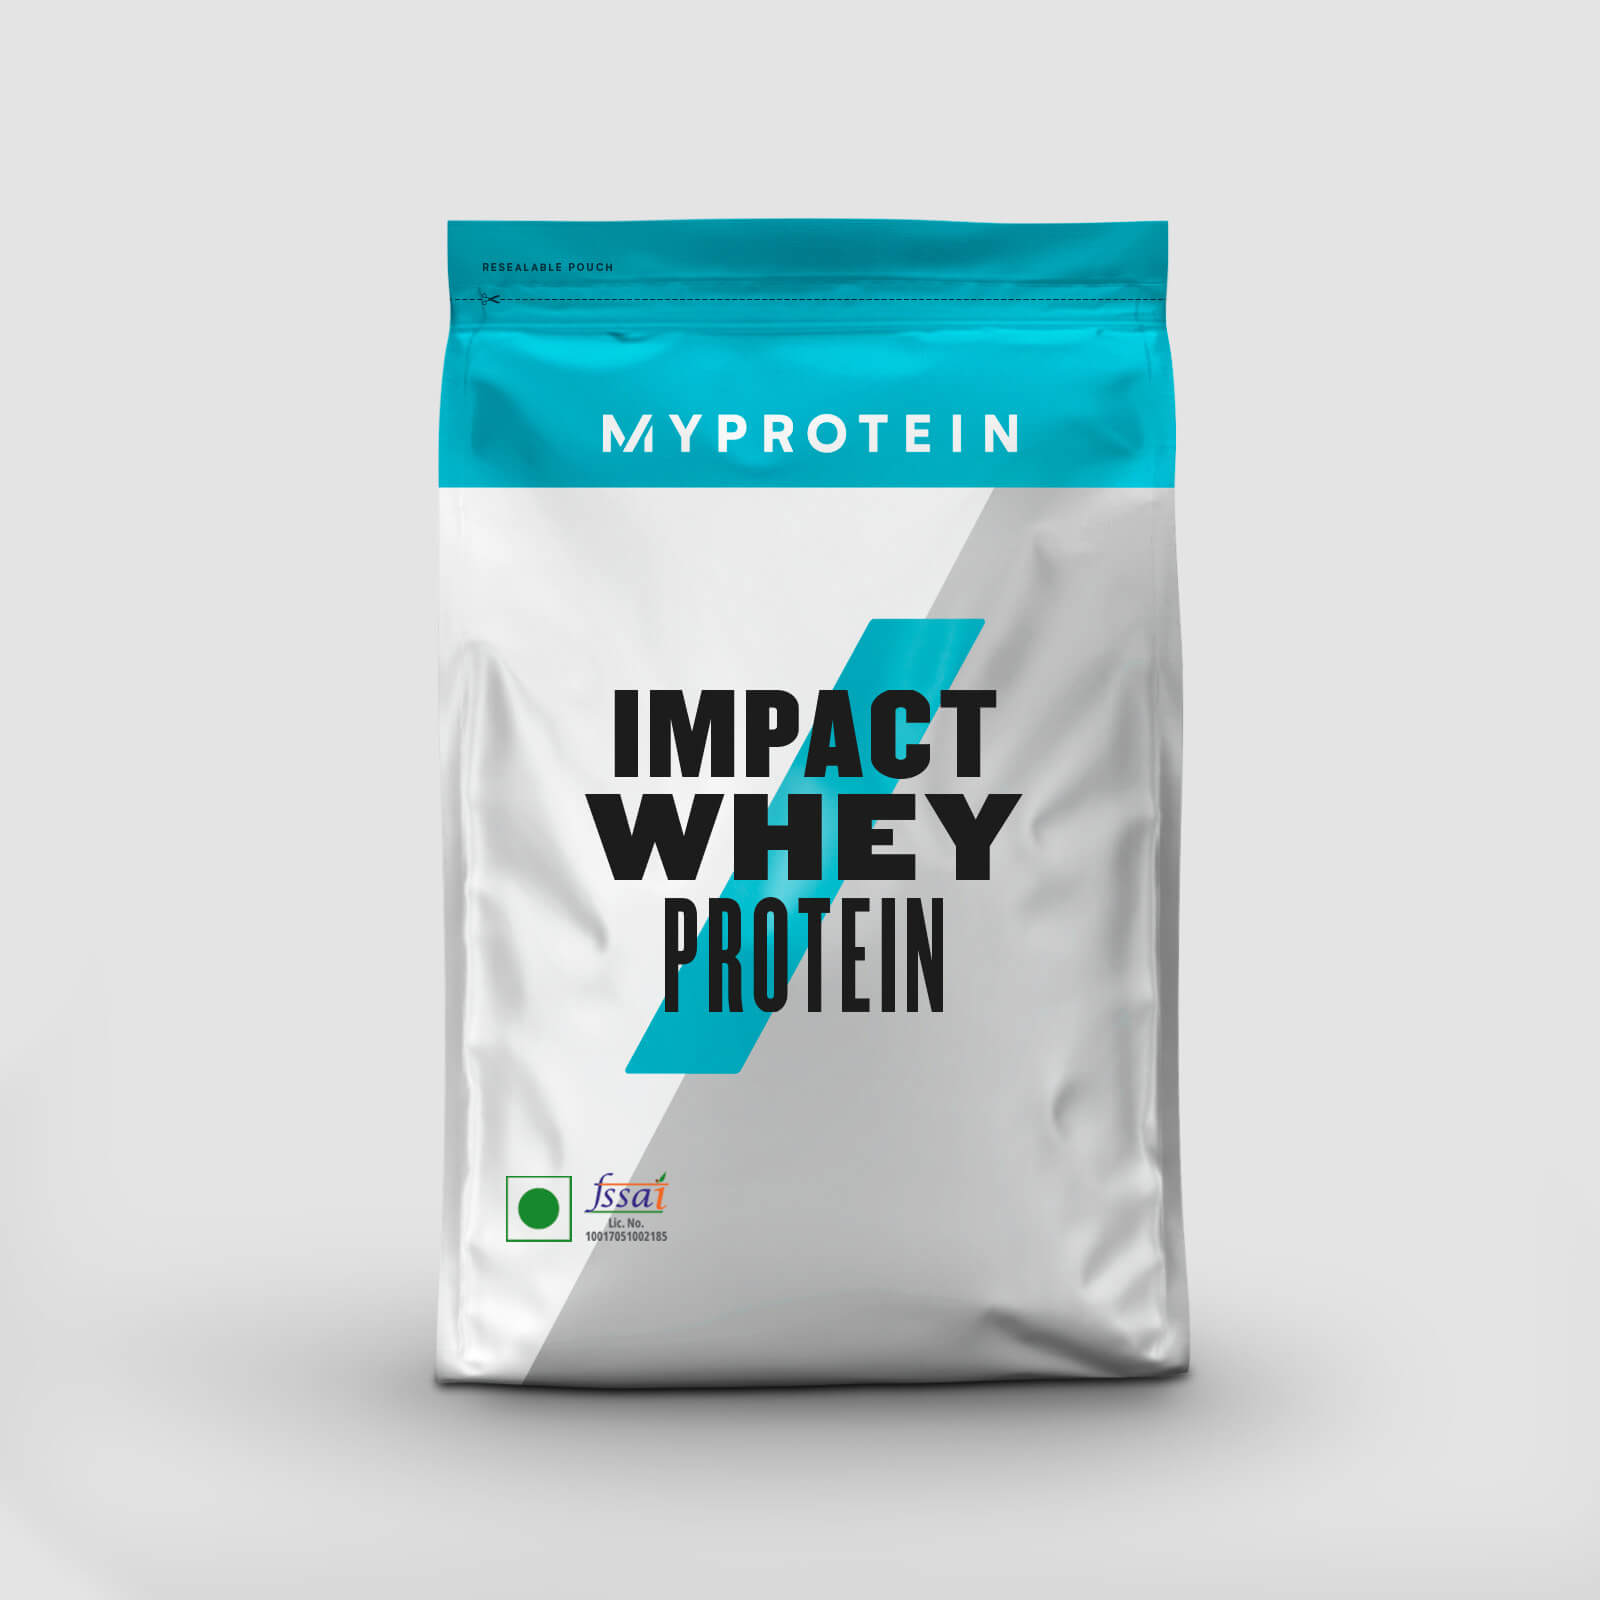 Impact Whey Protein - 250g - Coffee